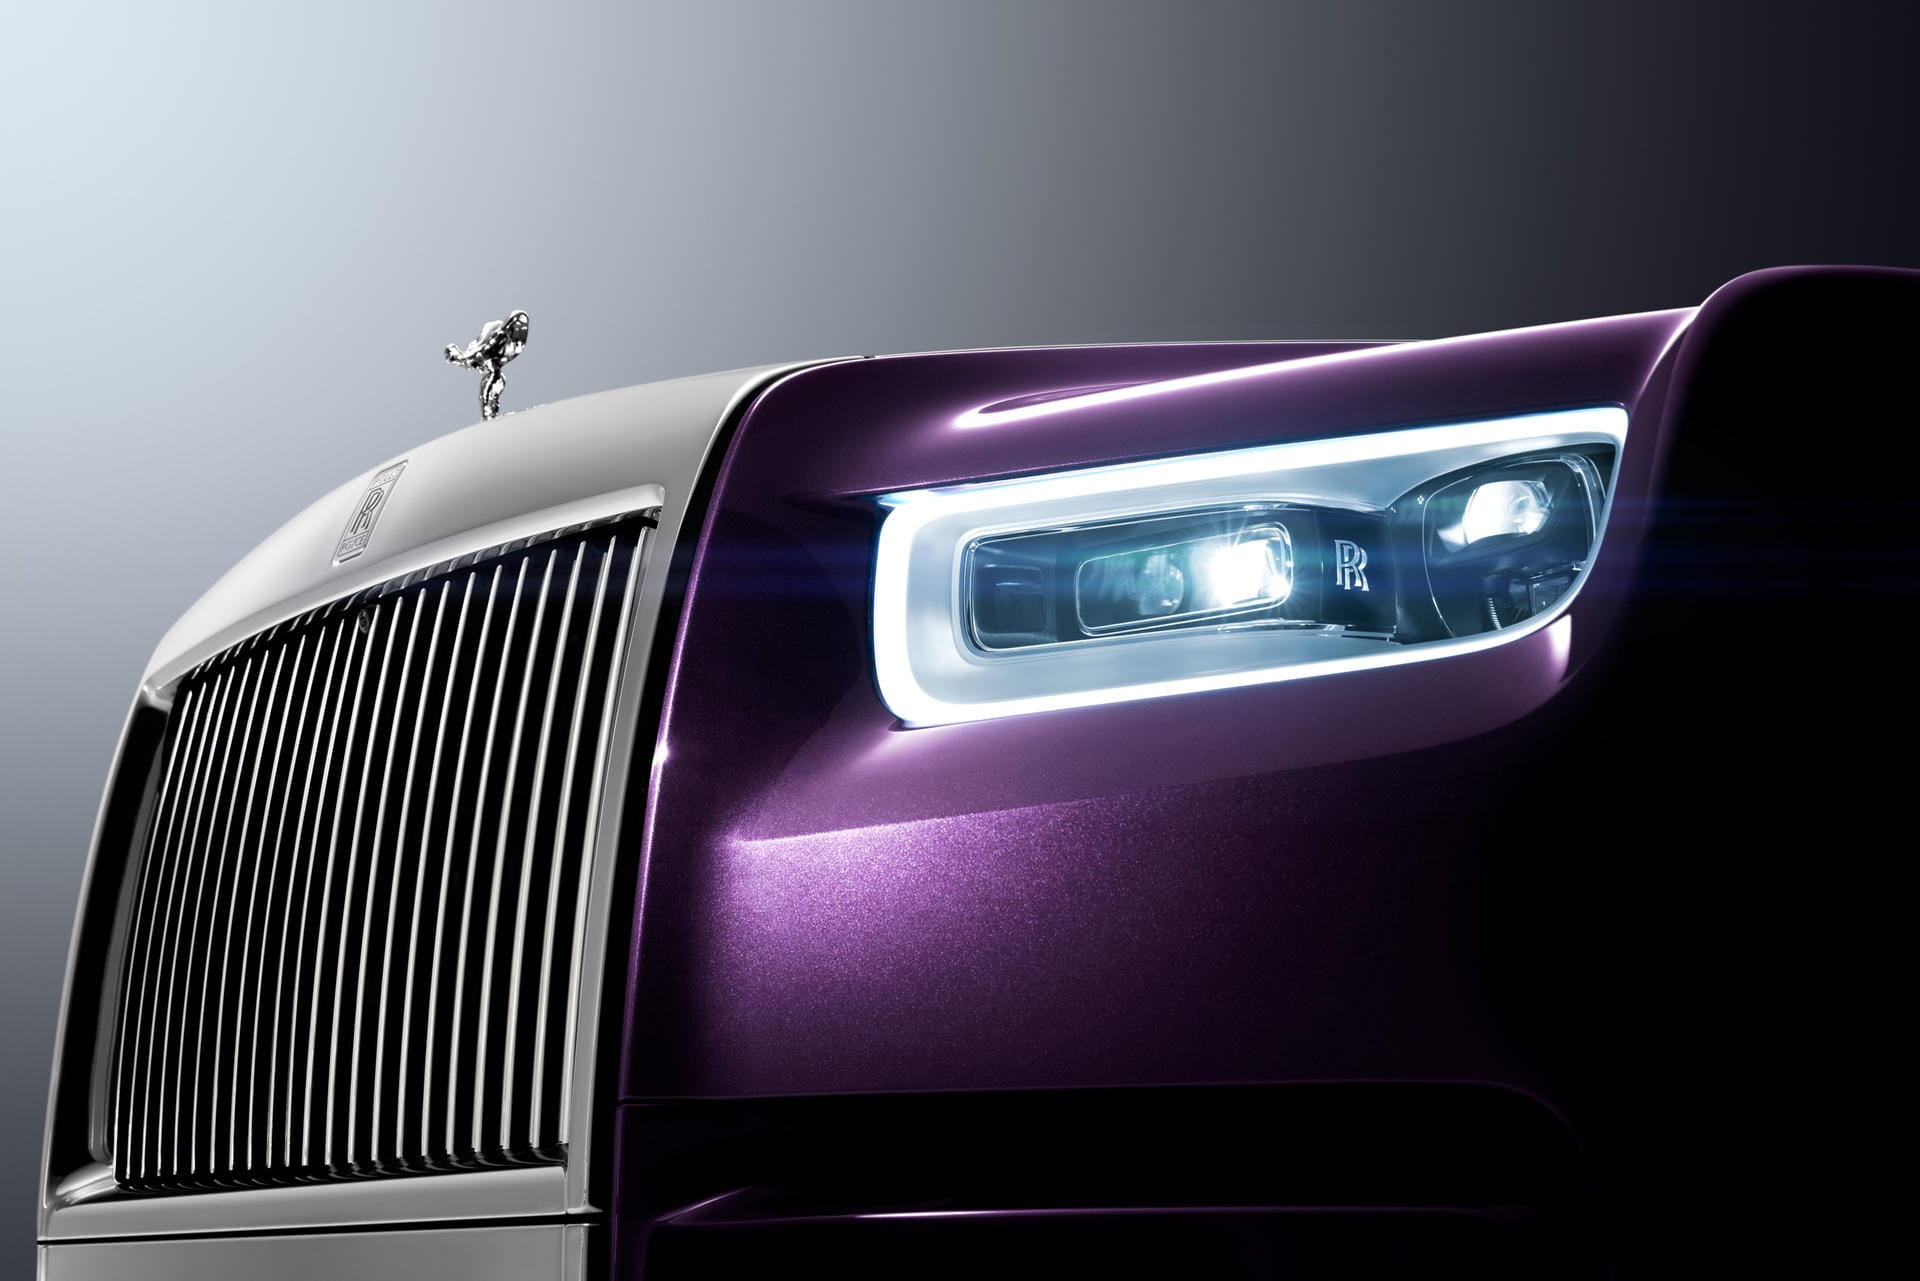 Achte Generation des Rolls-Royce Phantom